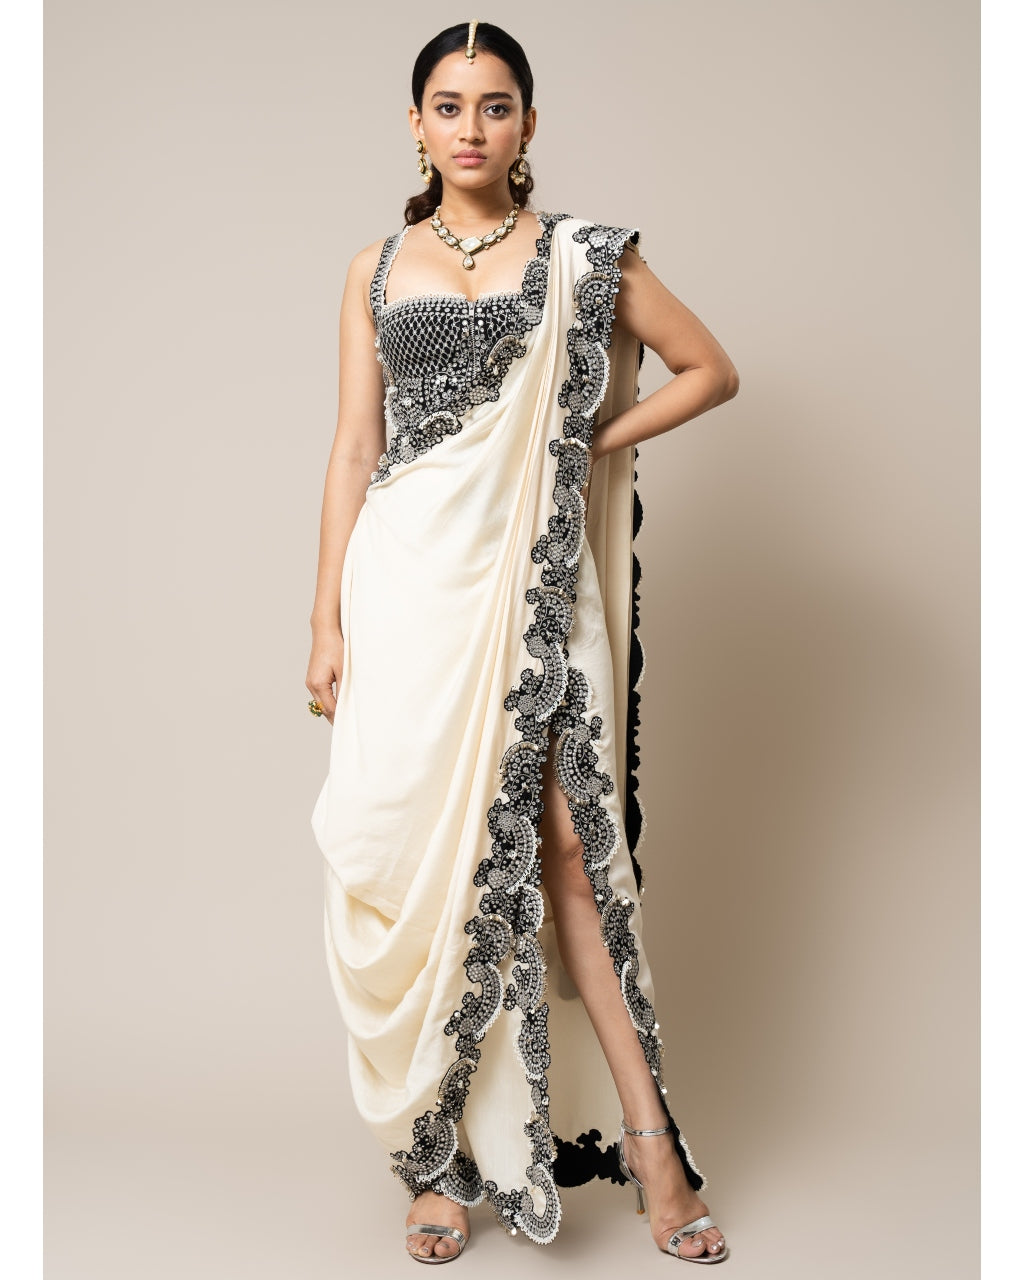 Off White & Black Pre-Draped Sari Set